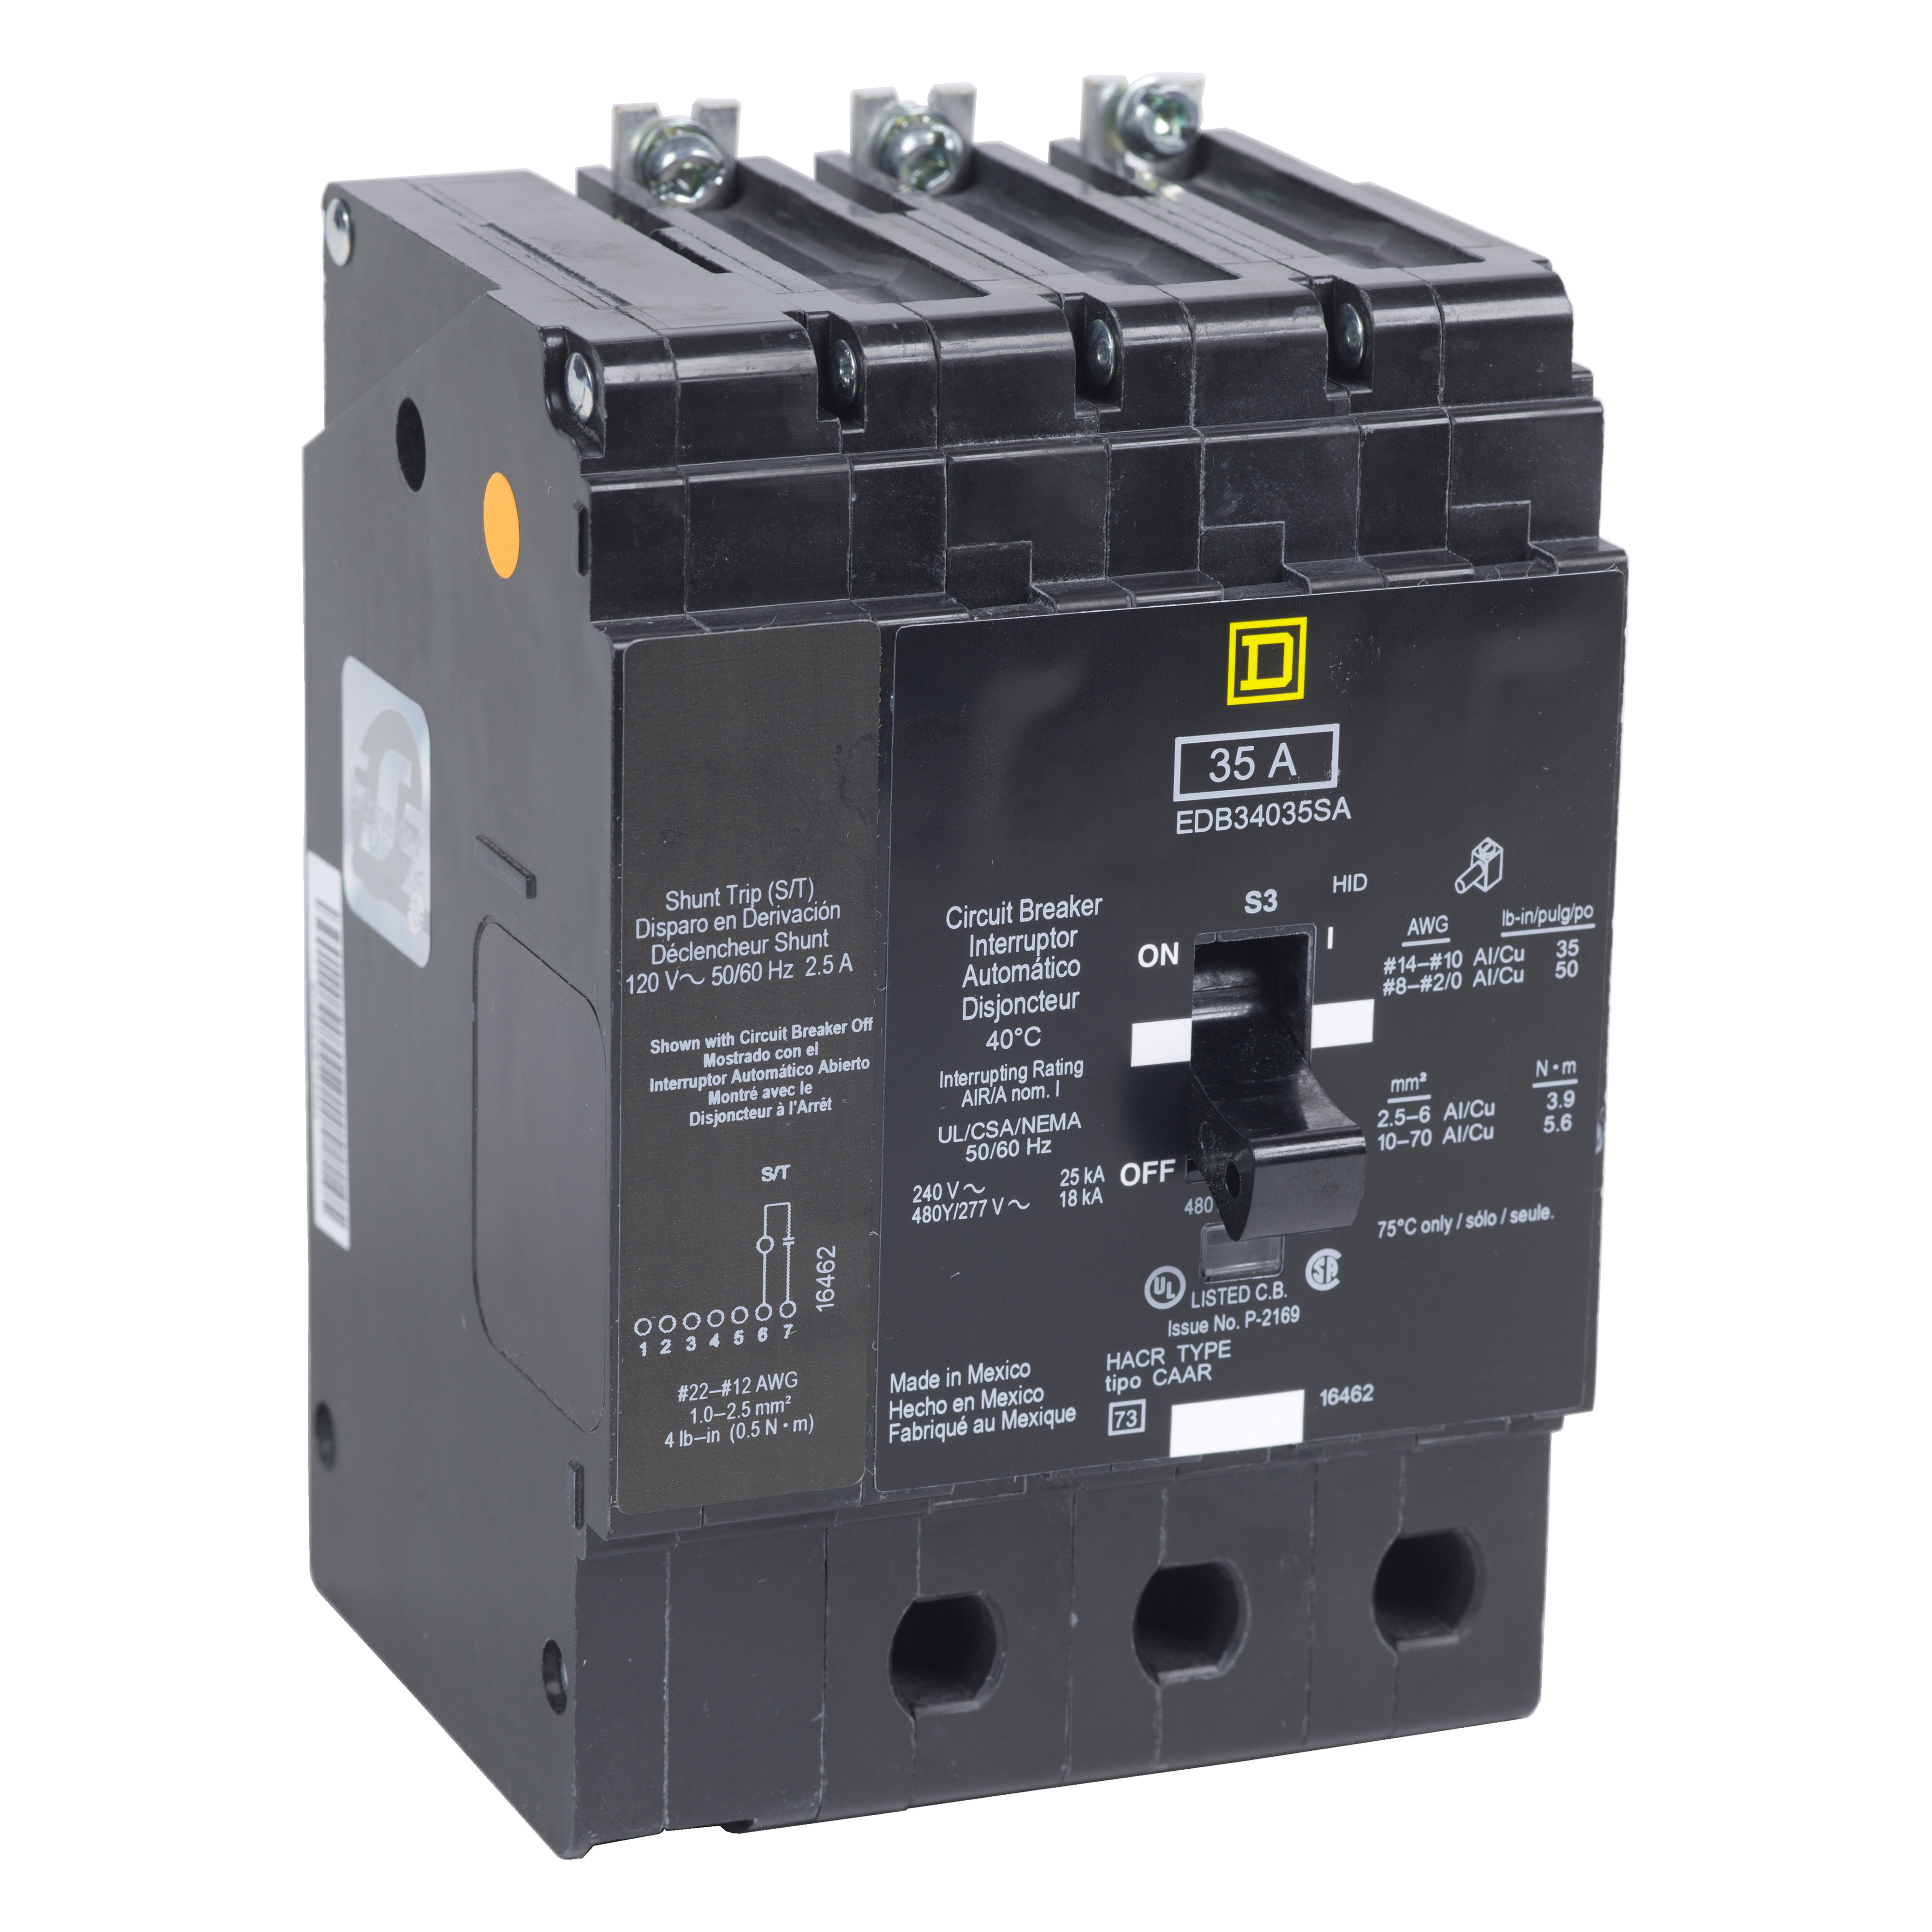 Mini circuit breaker, E-Frame, 40A, 3 pole, 480Y/277 VAC, 25 kA max, bolt on, aux switch, alarm switch, shunt trip